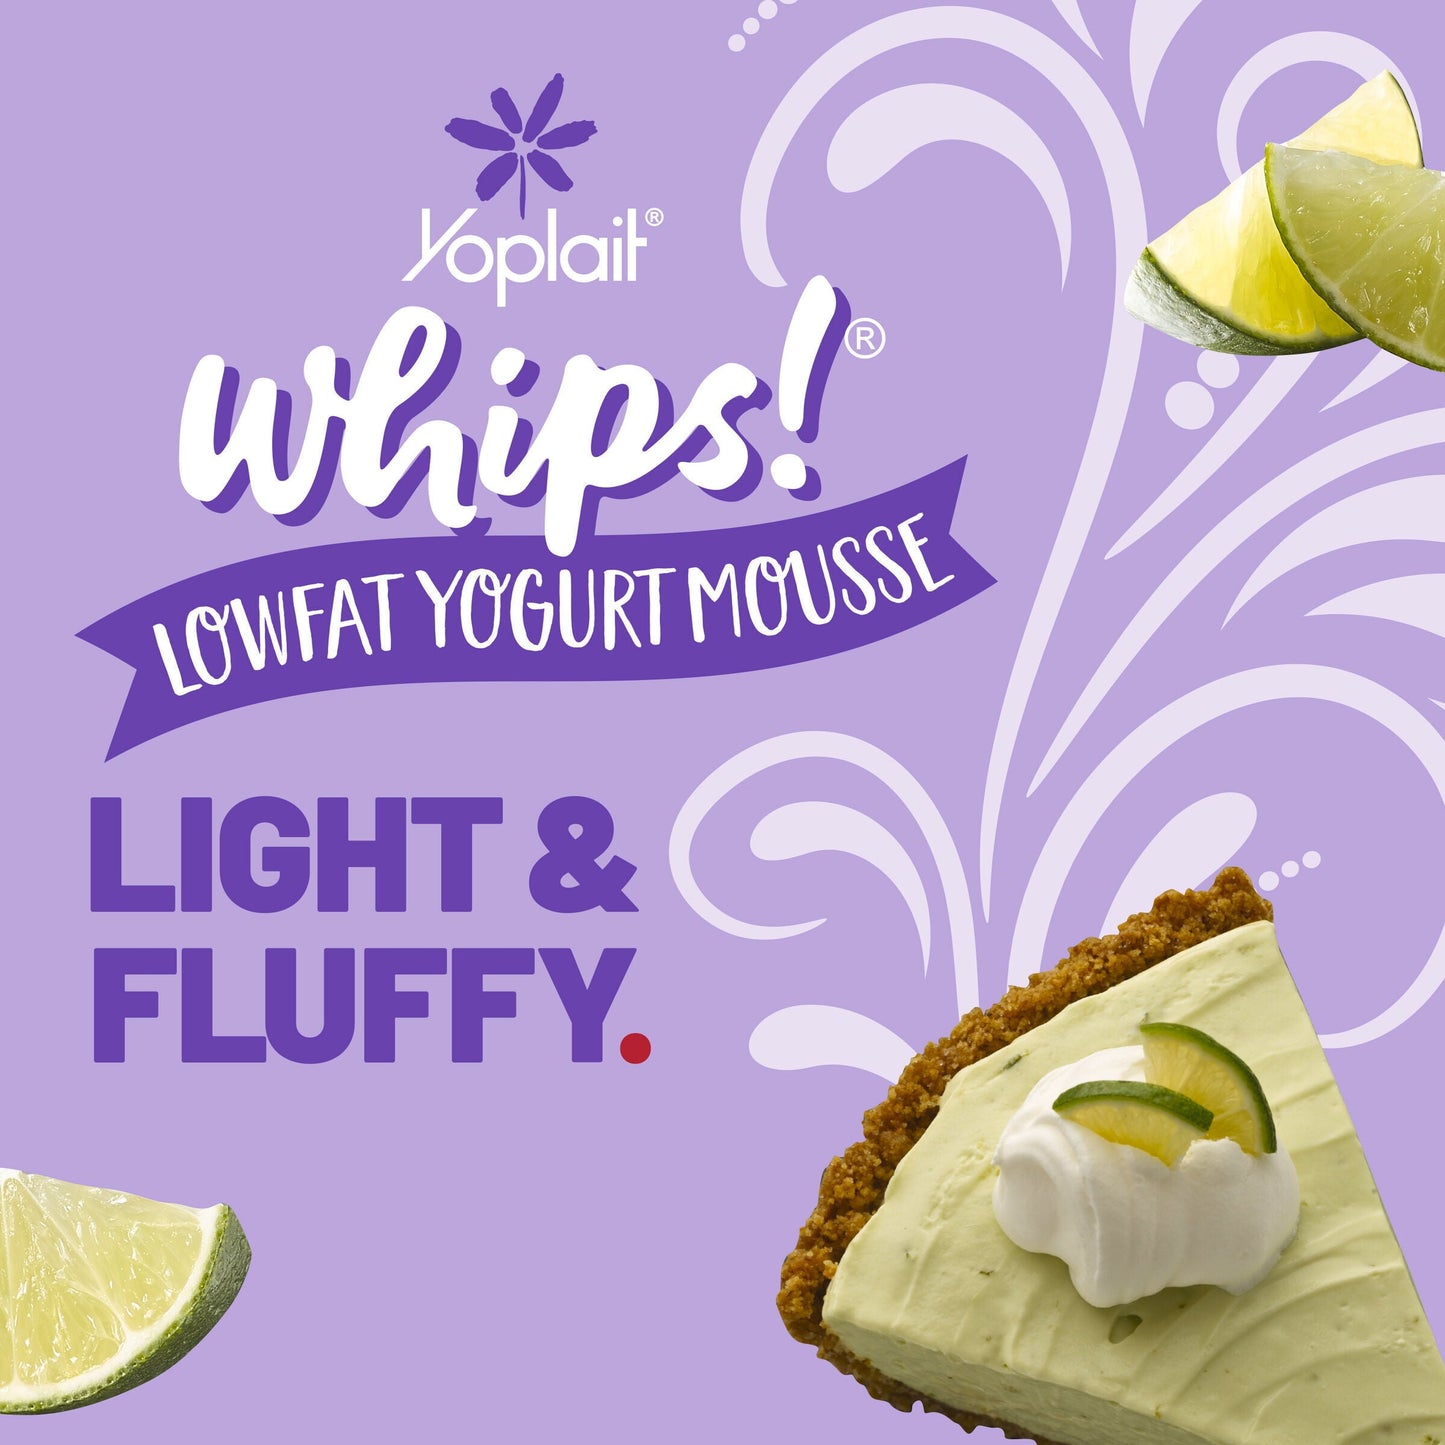 Yoplait Whips Lowfat Yogurt Mousse, Key Lime Pie Flavored Snack, 4 OZ Yogurt Cup